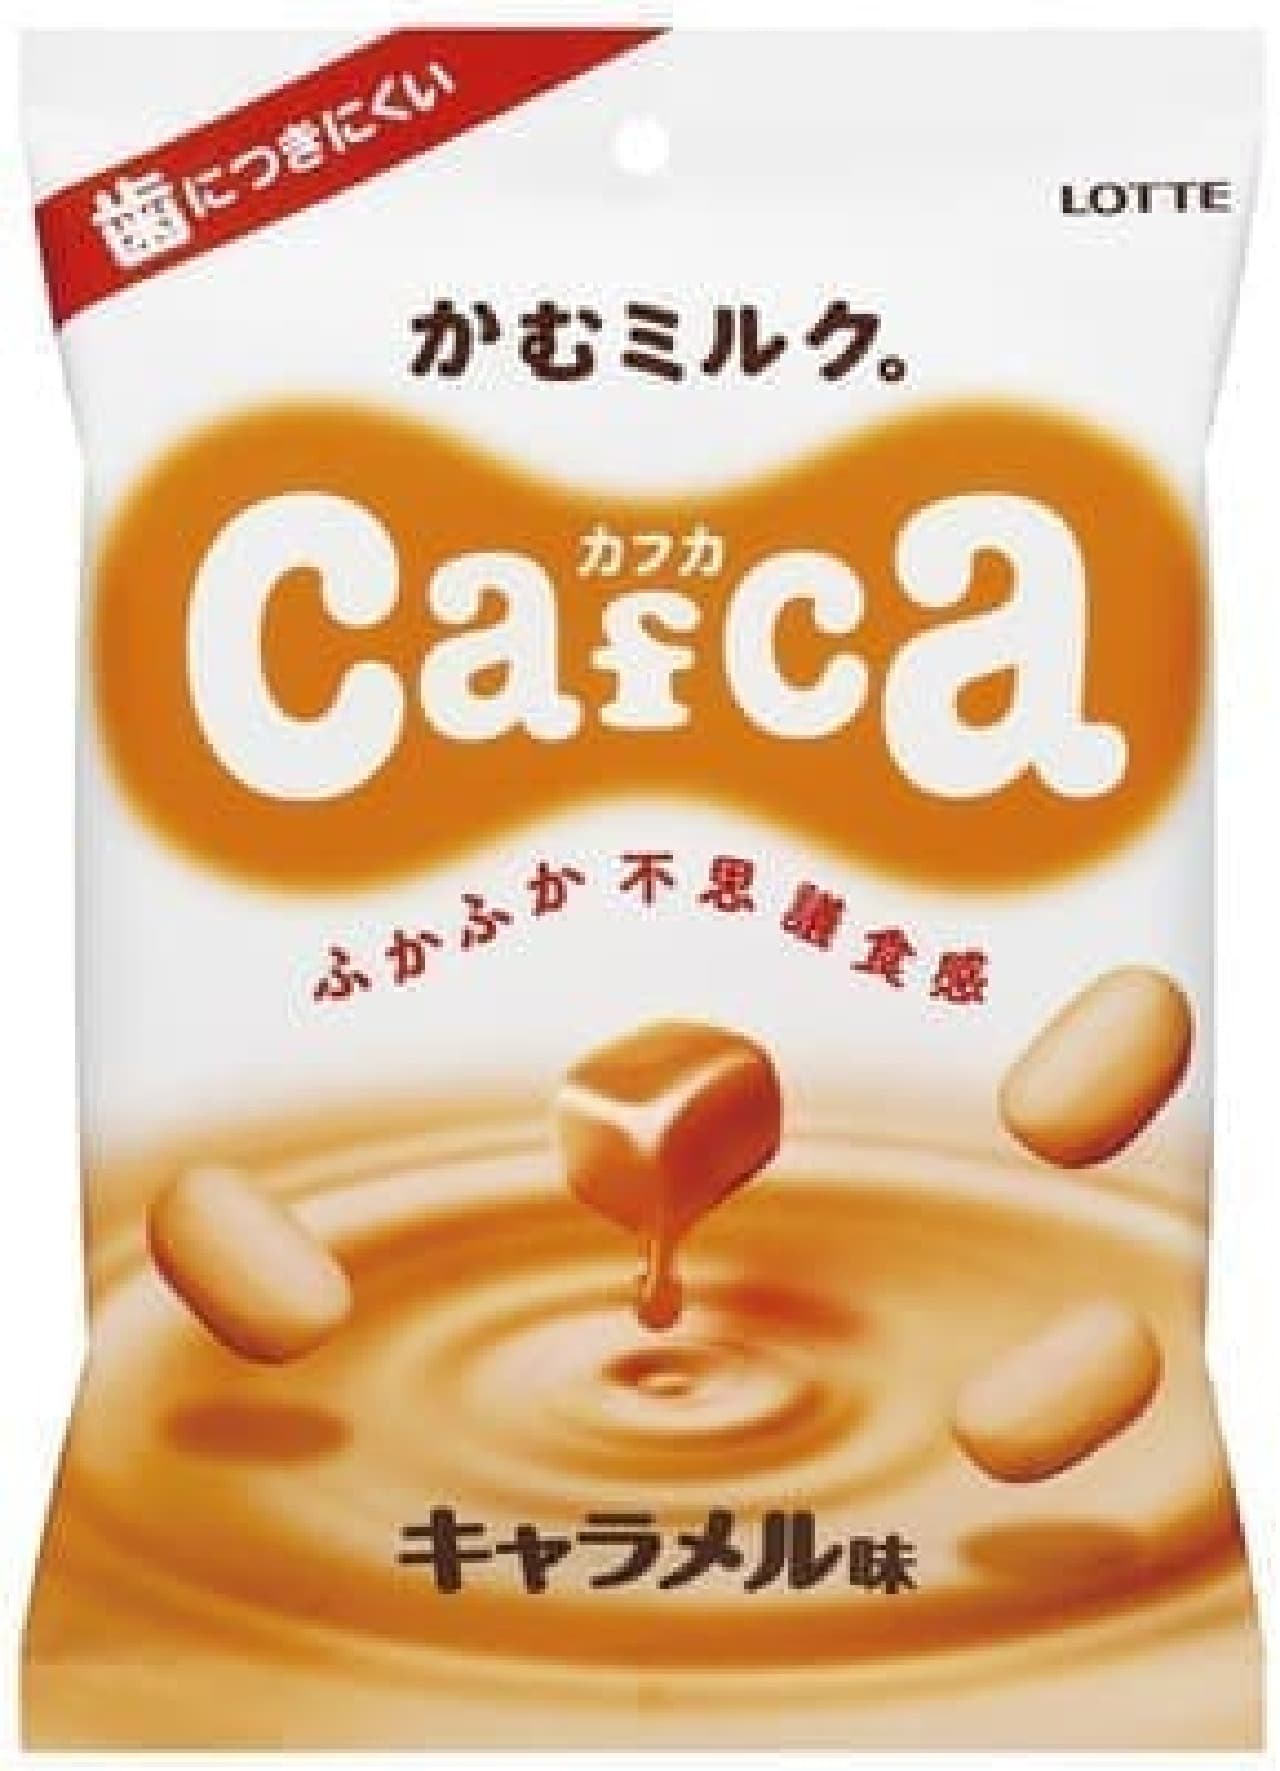 New flavor "Kafka [caramel flavor]"